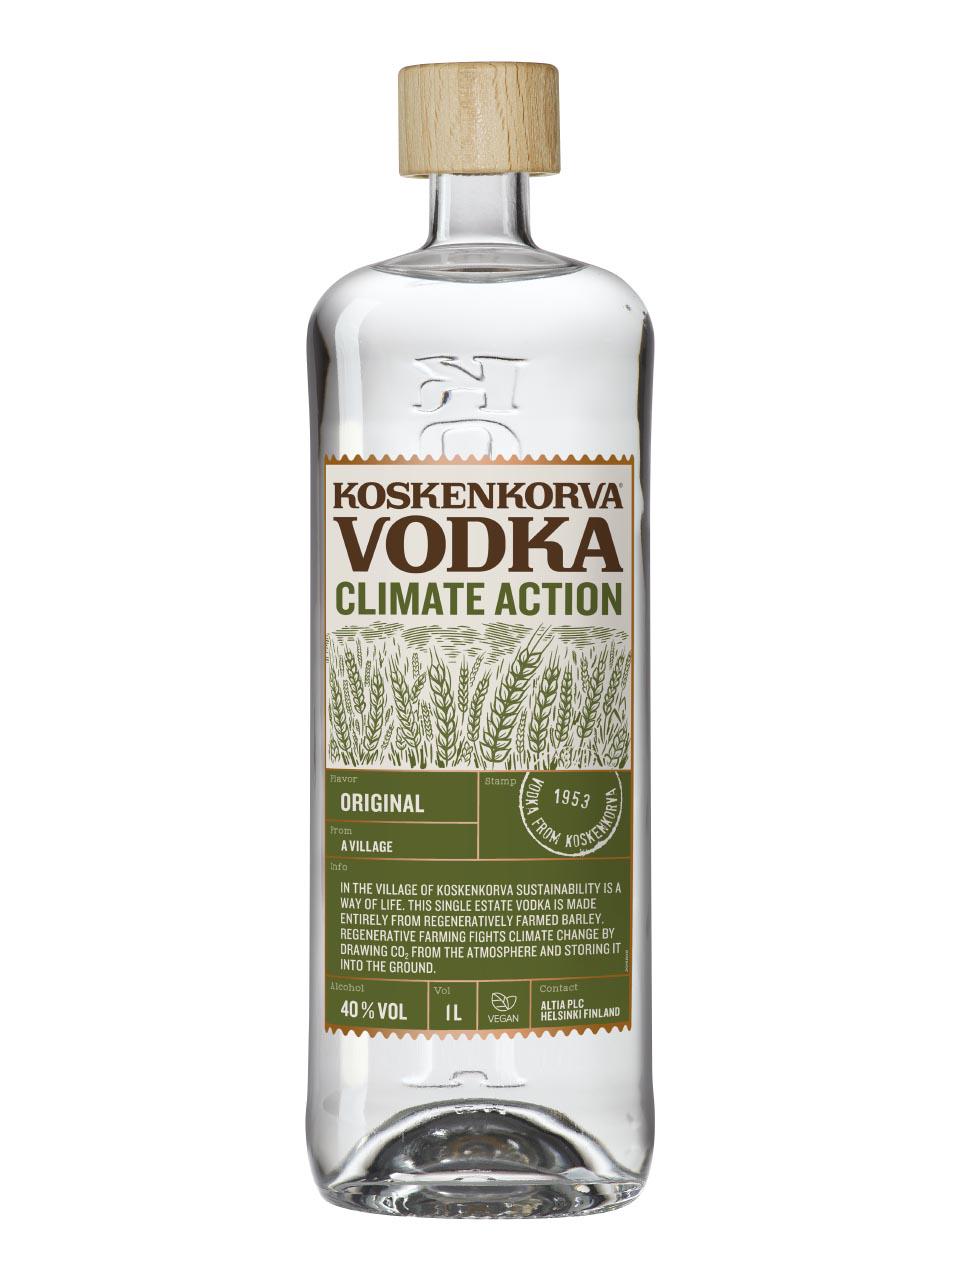 Koskenkorva Vodka Climate Action 40% 1L | Frankfurt Airport Online Shopping